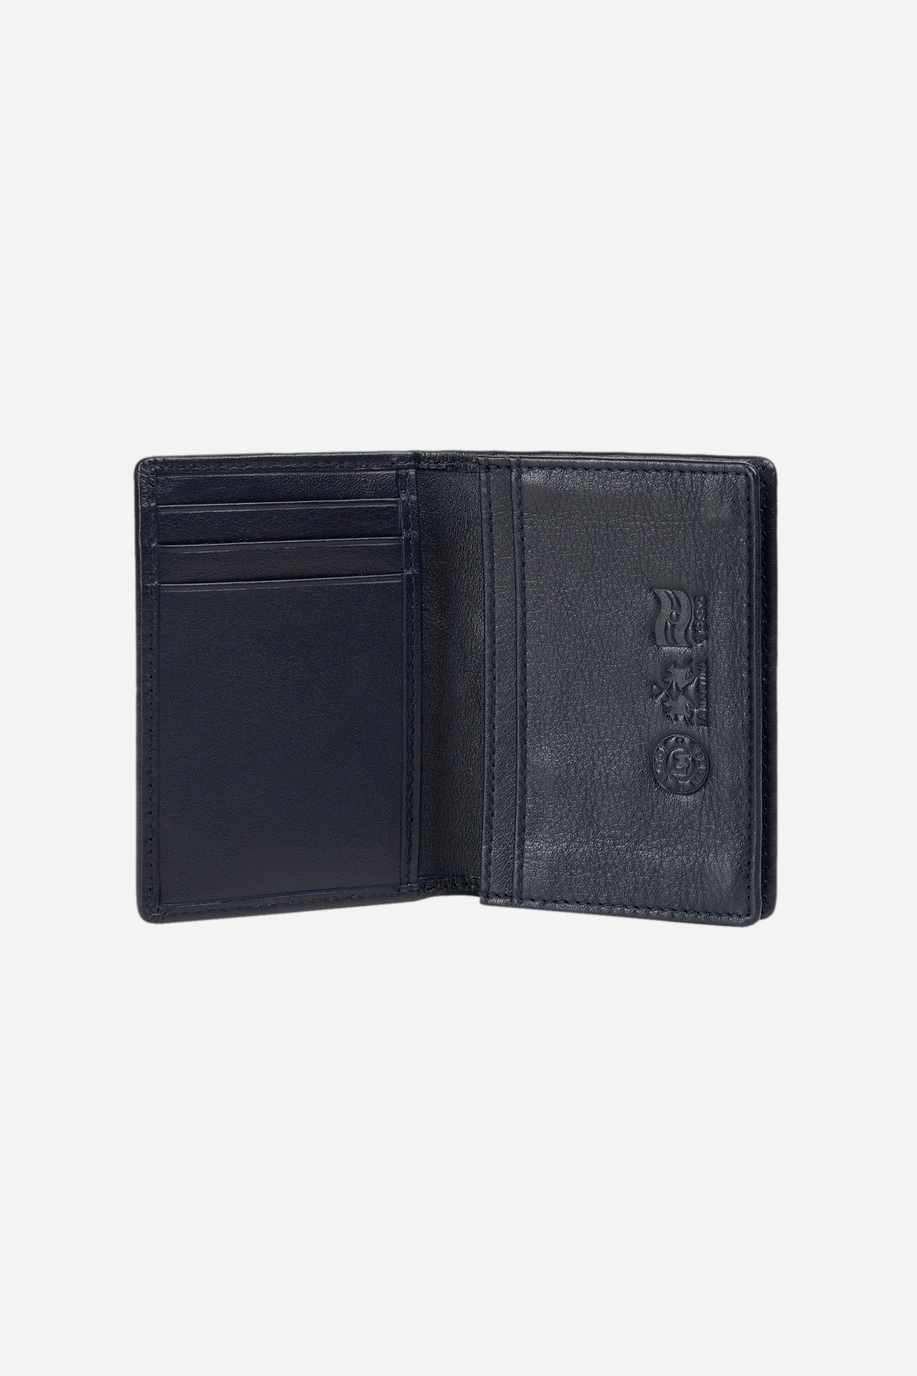 Men's leather wallet - Lopez - Wallets and key chains | La Martina - Official Online Shop